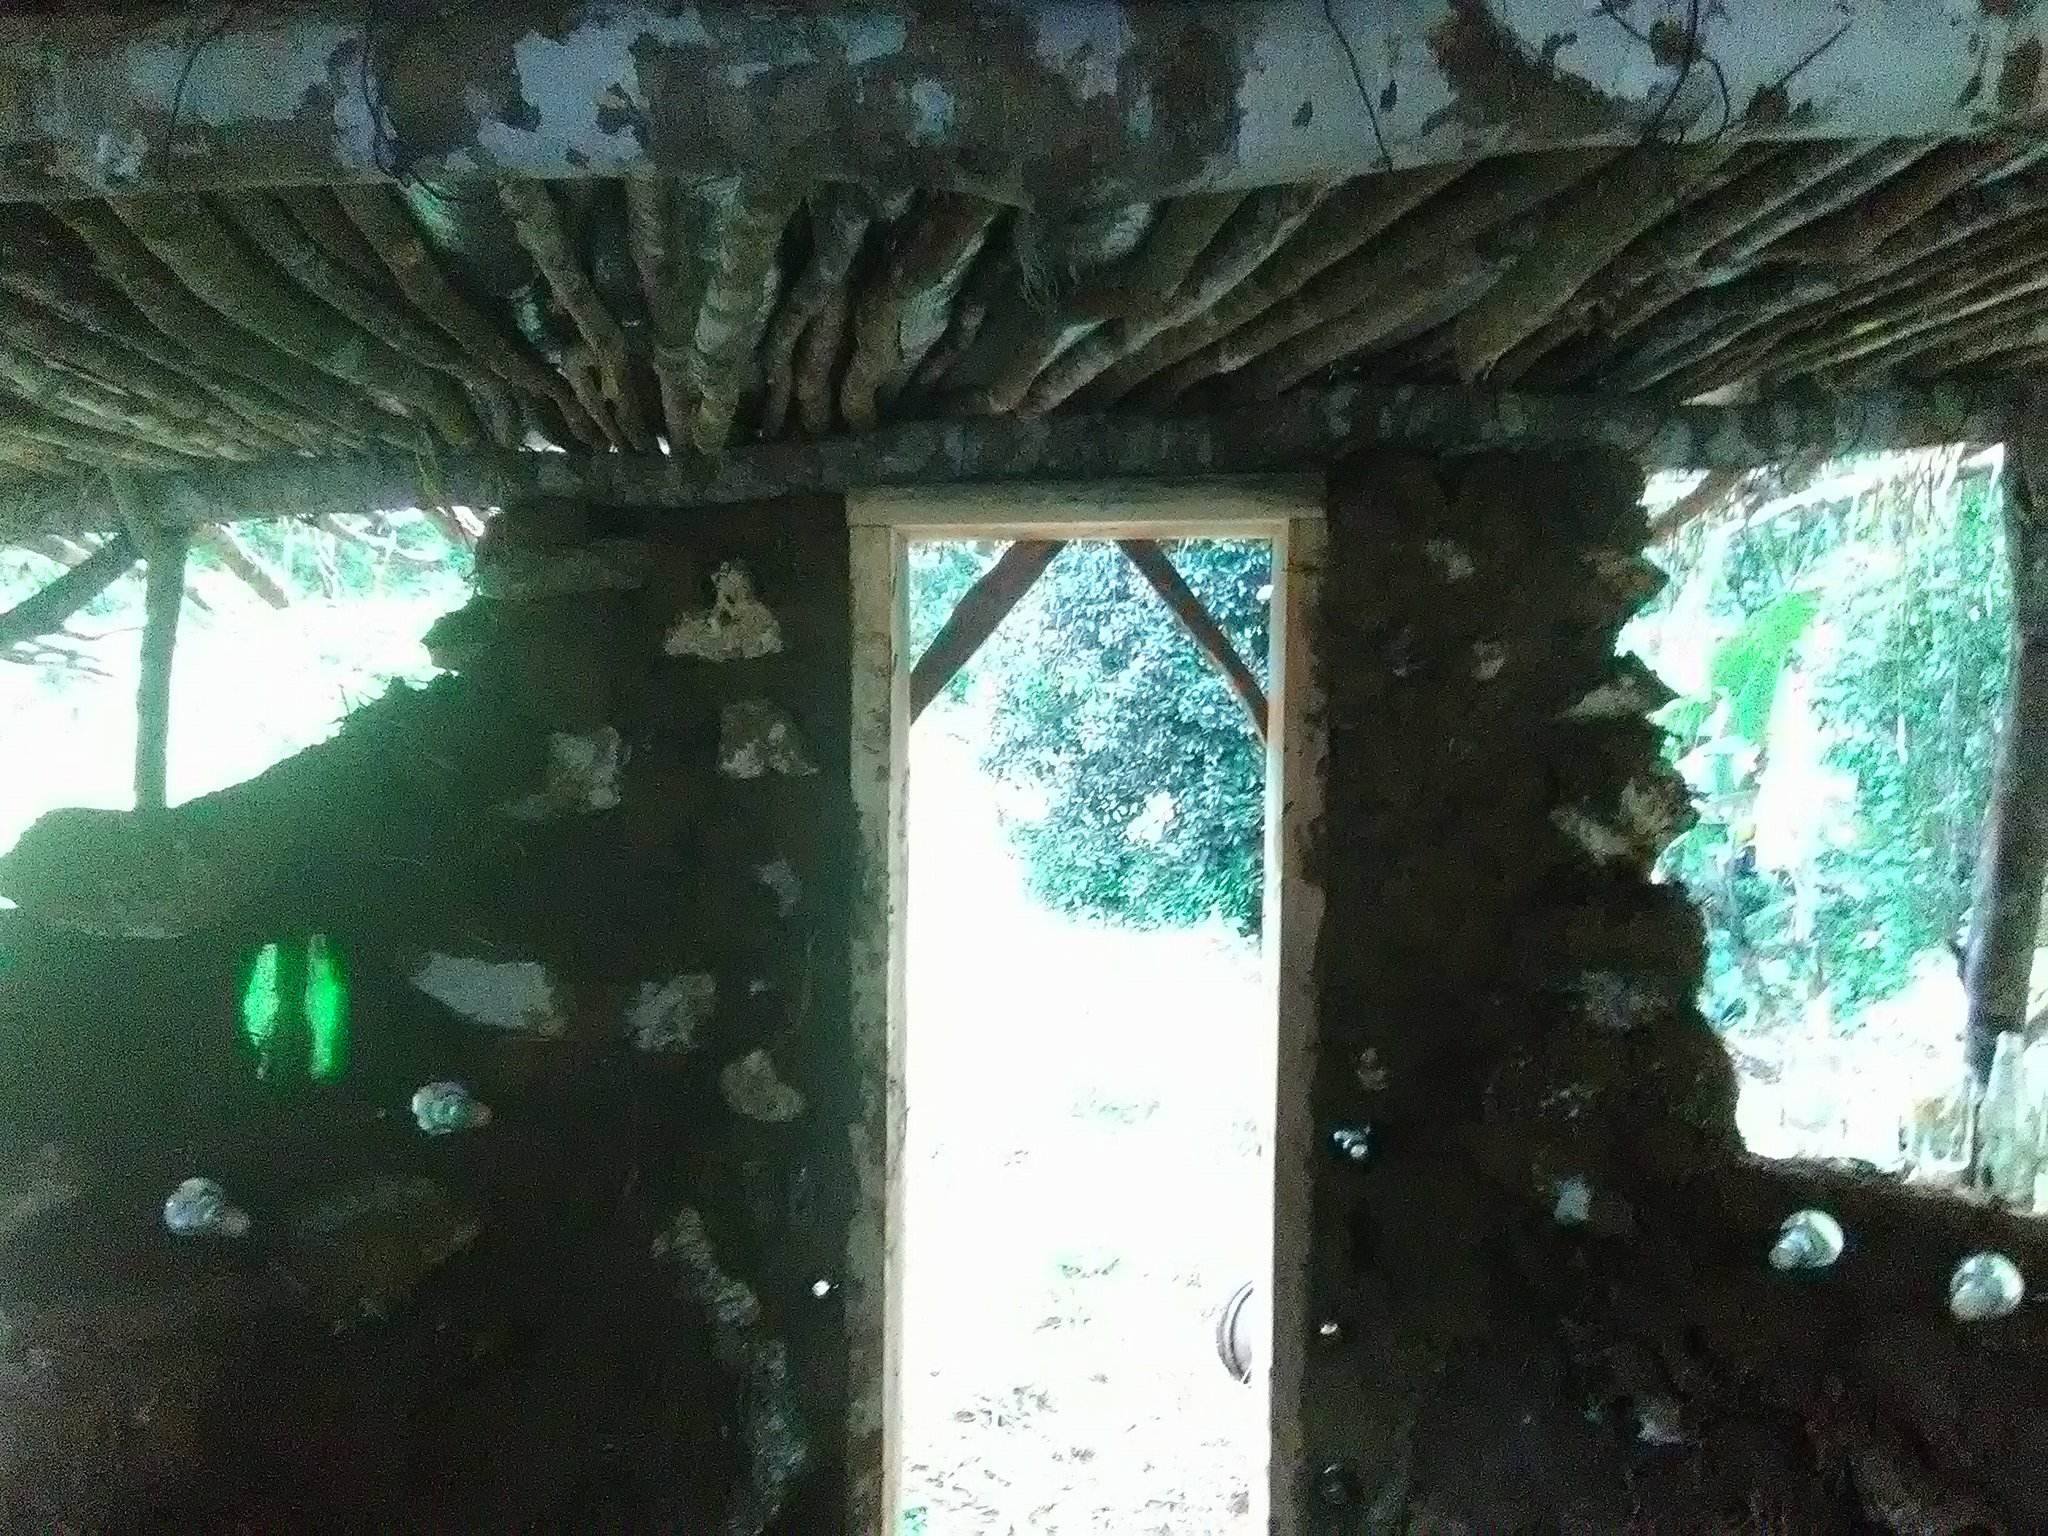 Interior of the Cob Hut